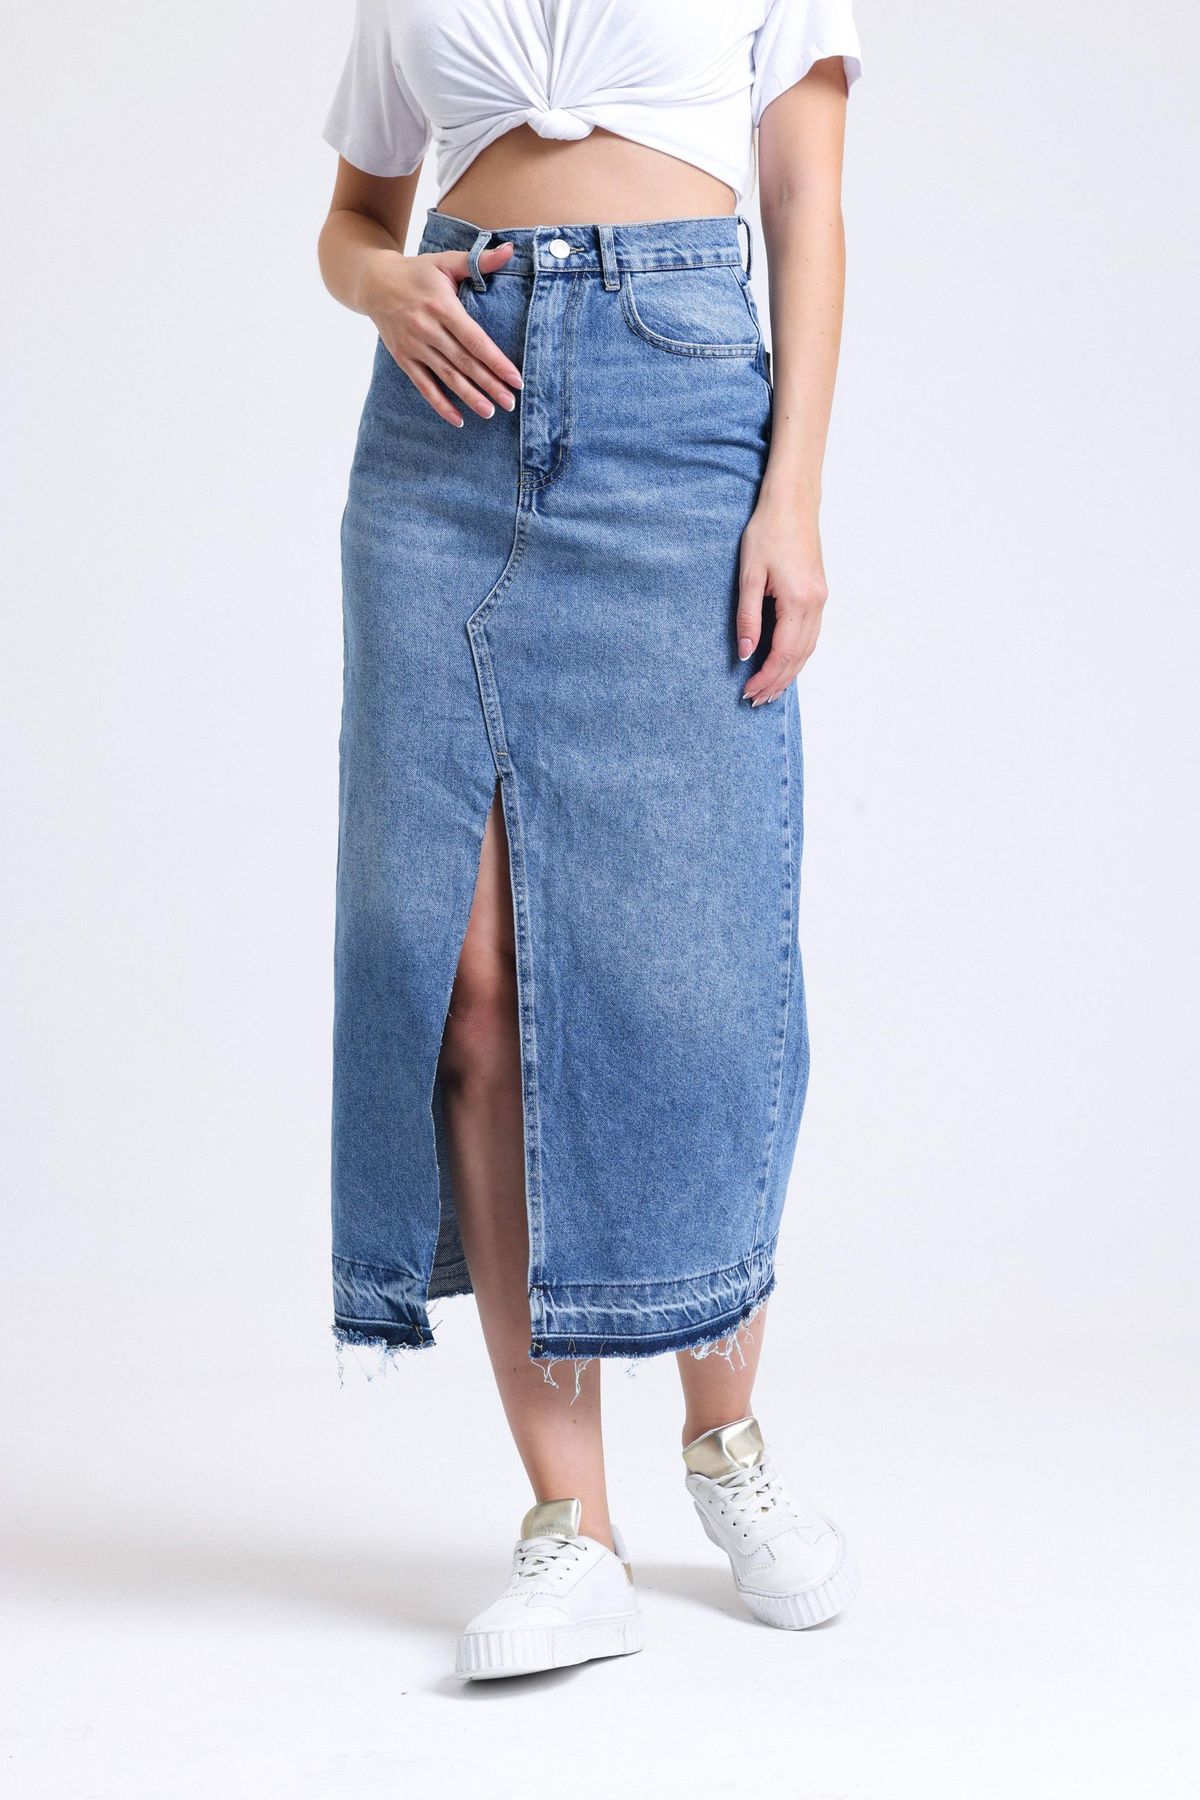 Denim High Waist Midi Skirt with a Front Slit